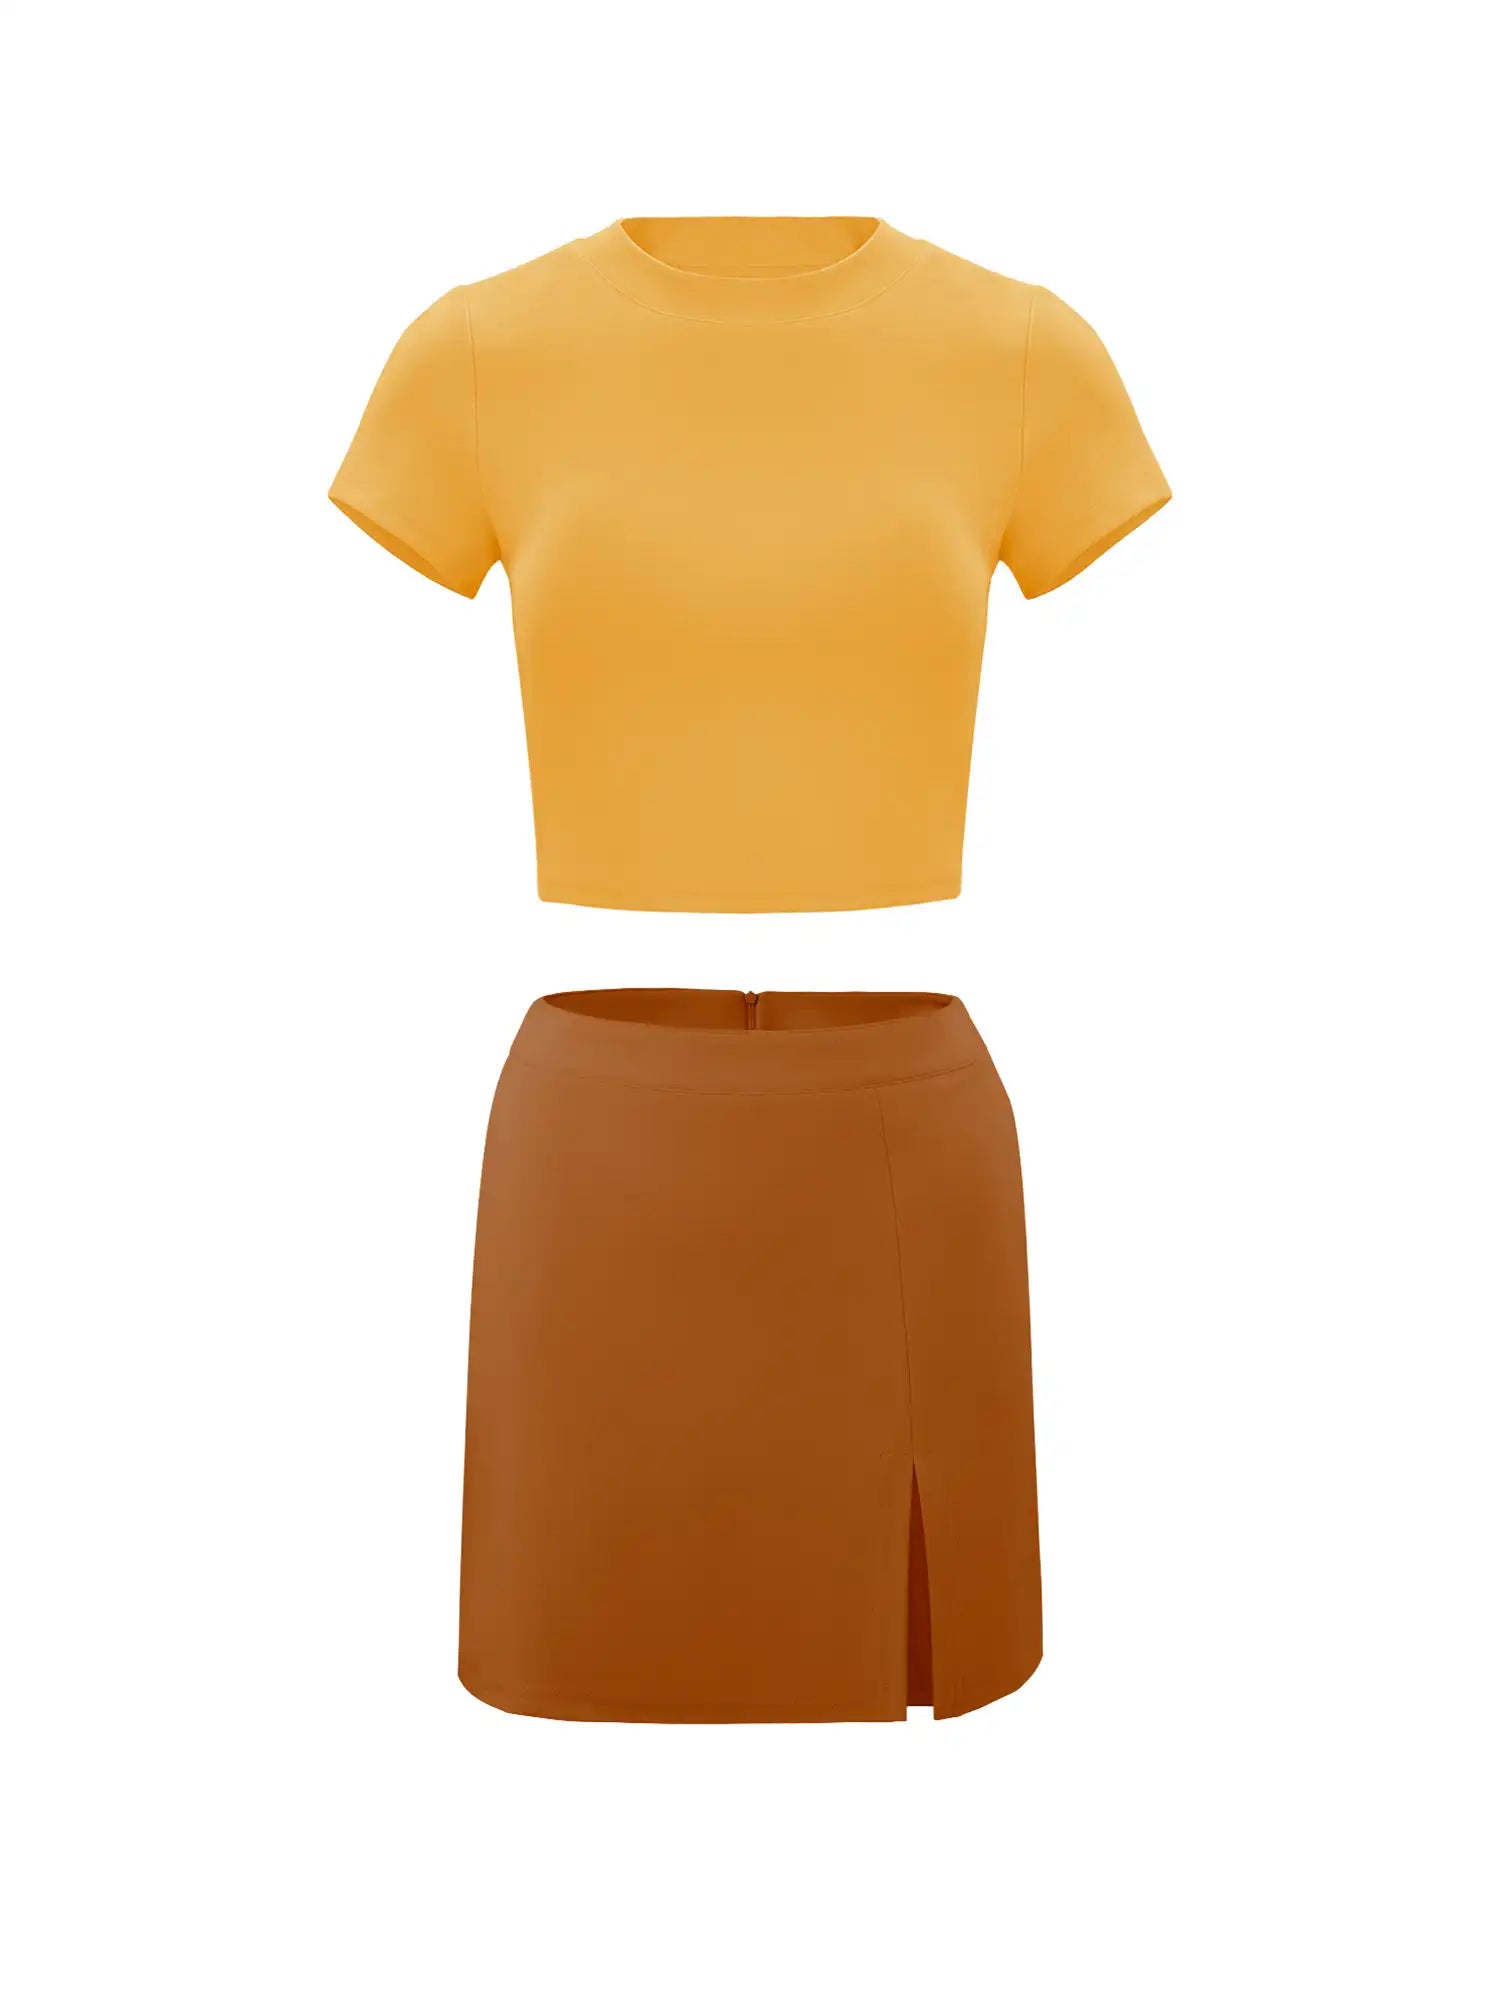 Roundneck Short &amp; Mini Skirt Contrasting Color Casual Set